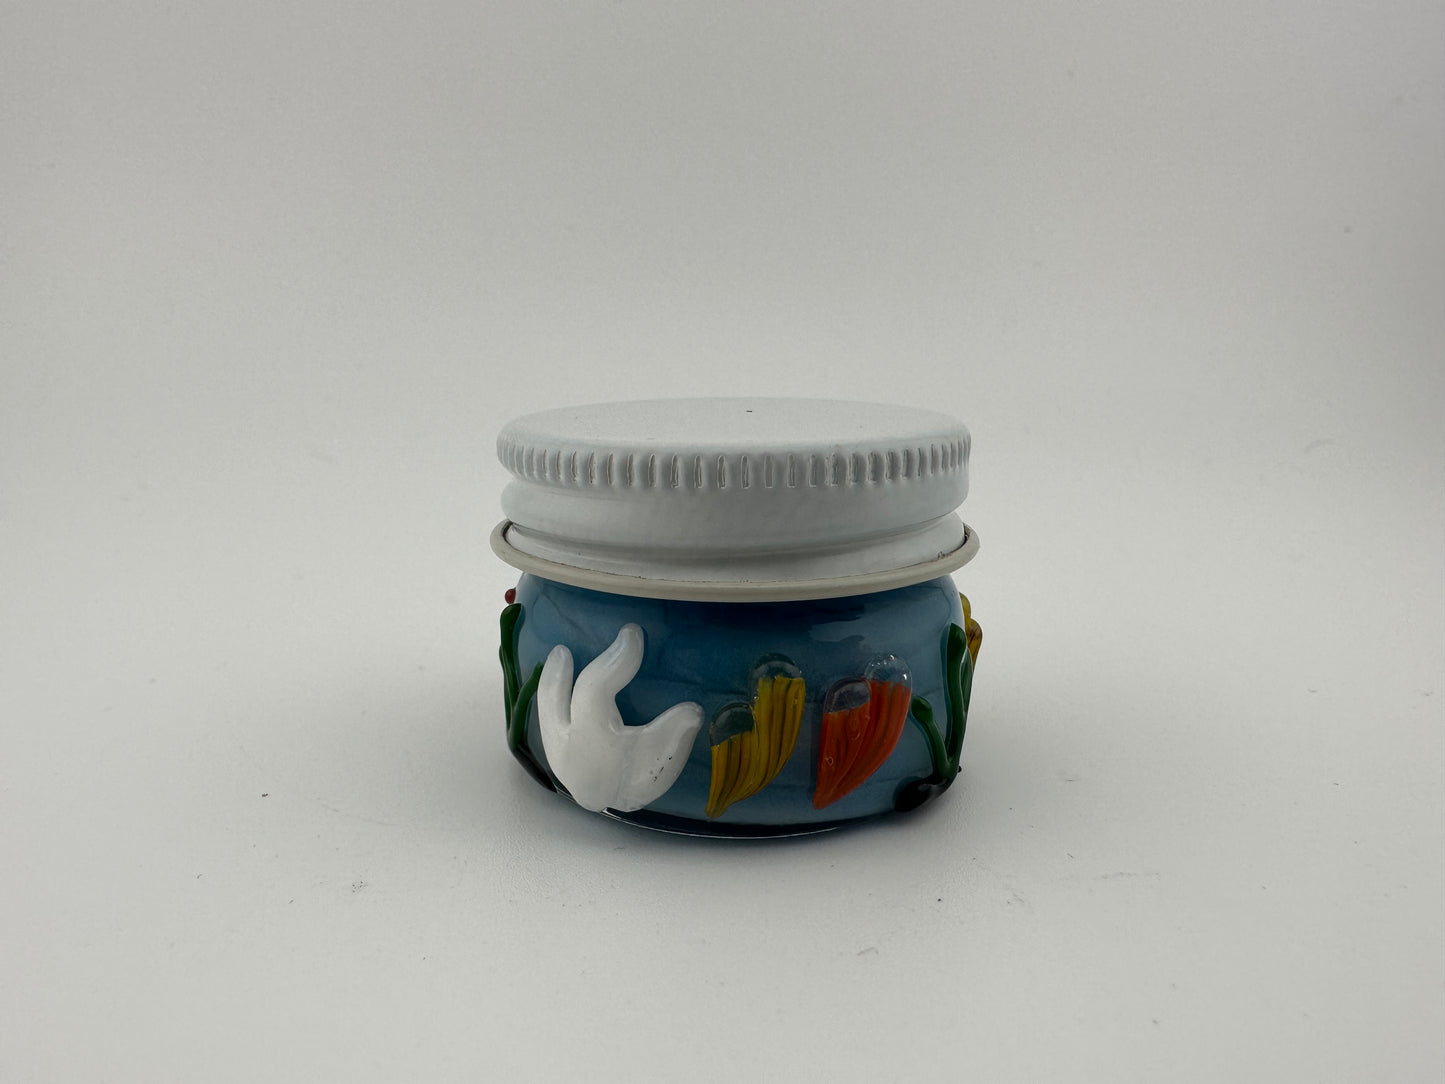 Empire Glassworks Outer Space Terp Jar / Baller Jar